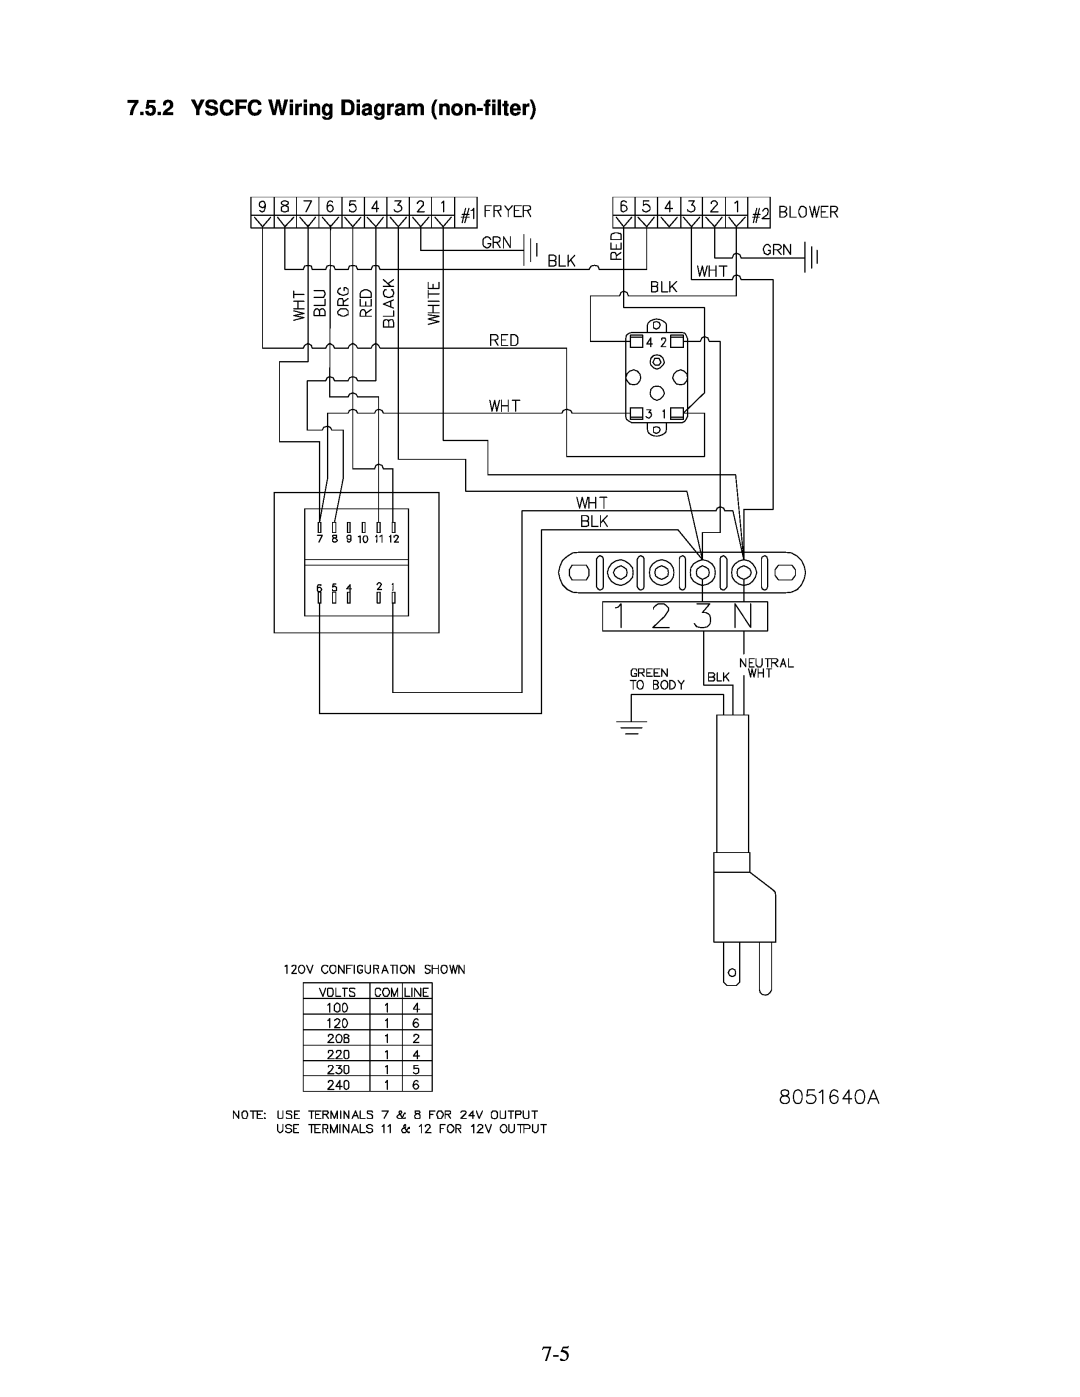 Frymaster YSCFC24 operation manual YSCFC Wiring Diagram non-filter 